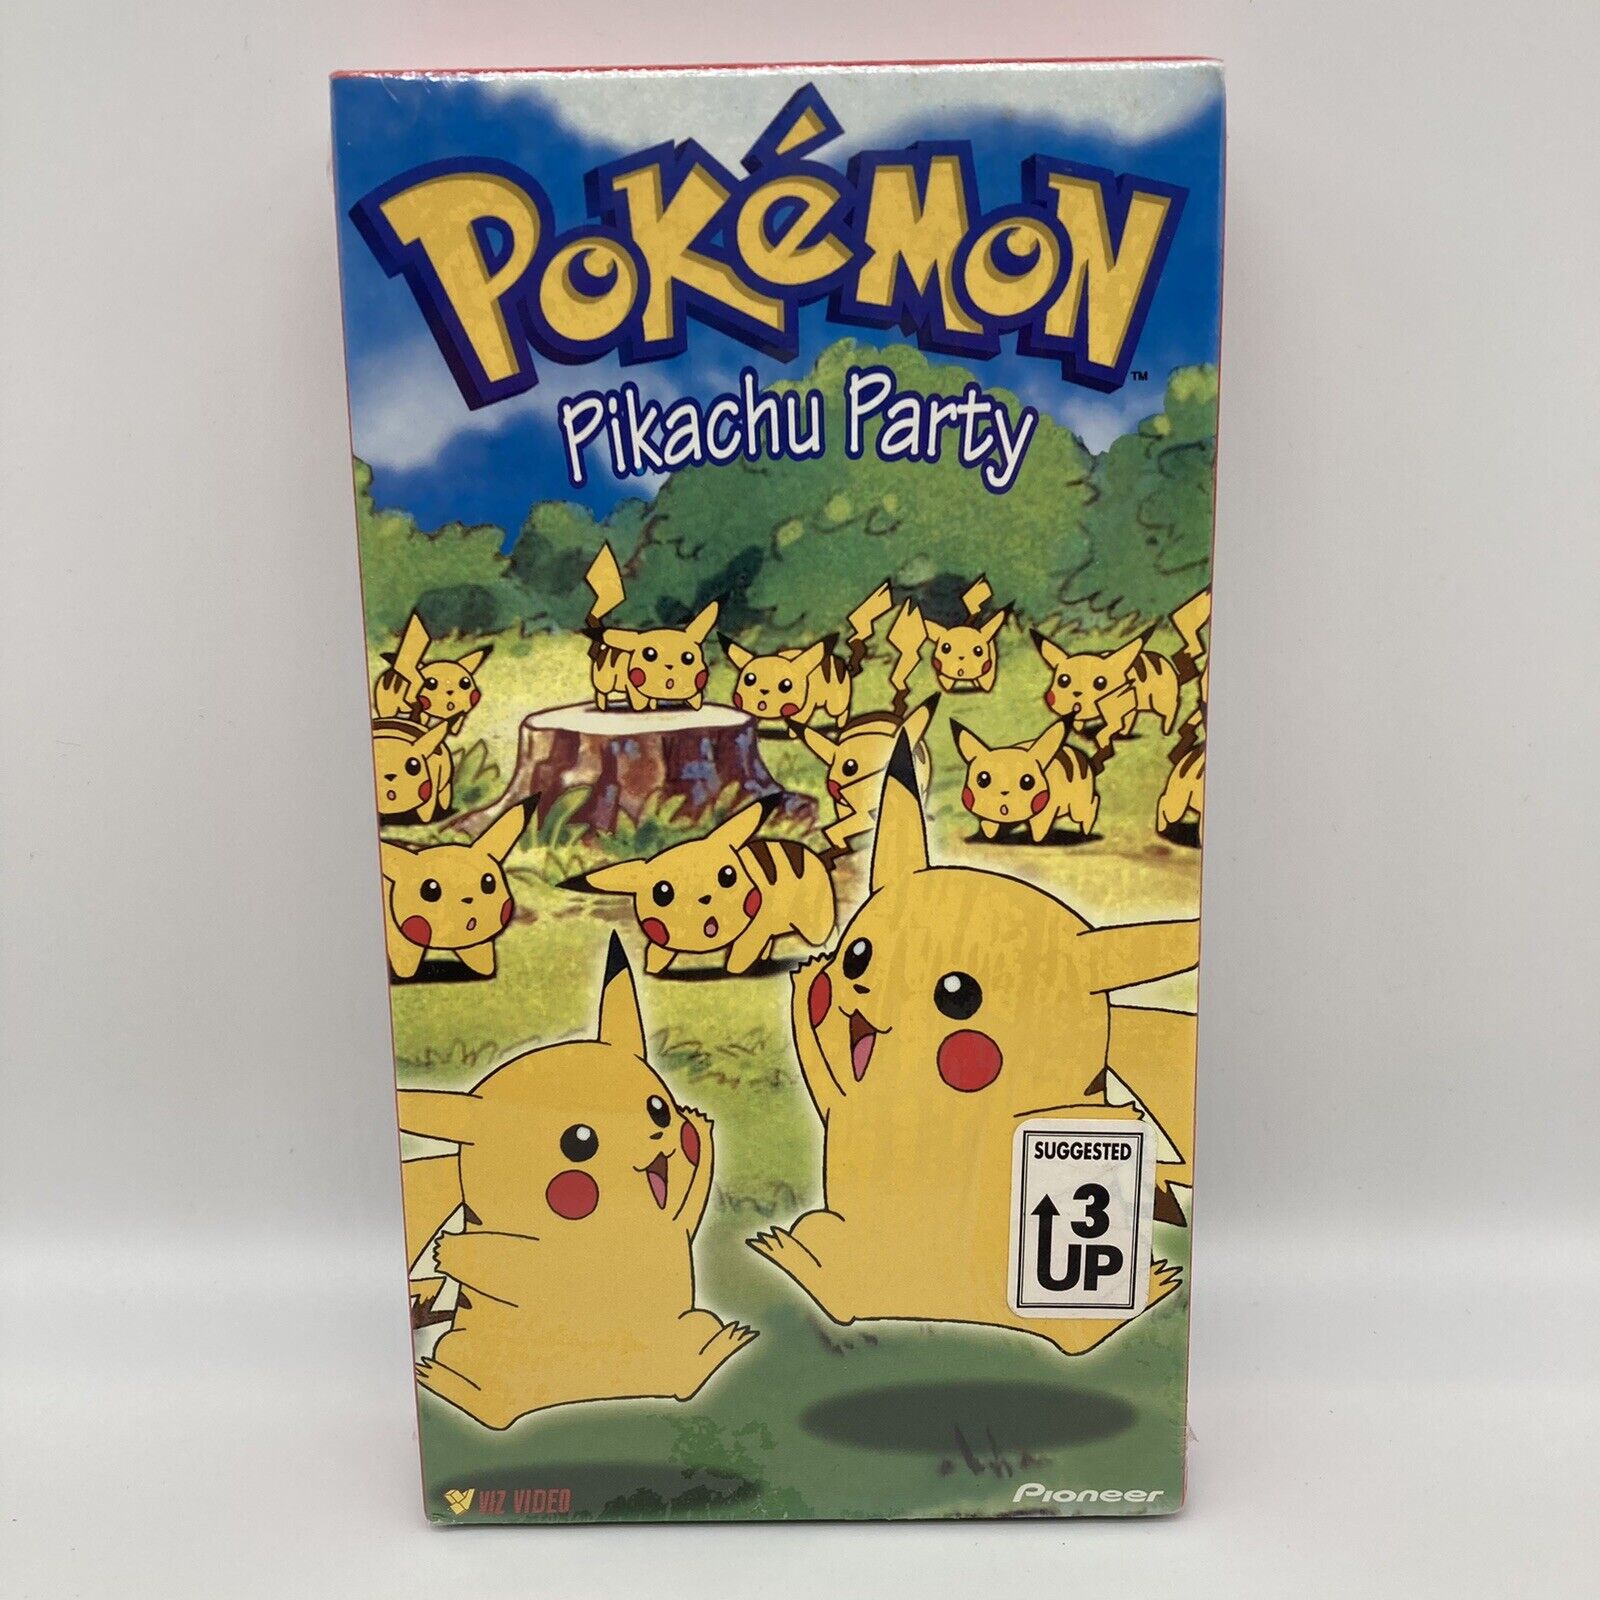 Pokemon Pikachu Party VHS, 1997, 1998 Volume 12 New Factory SEALED! Pioneer Najnowszy standard produktu